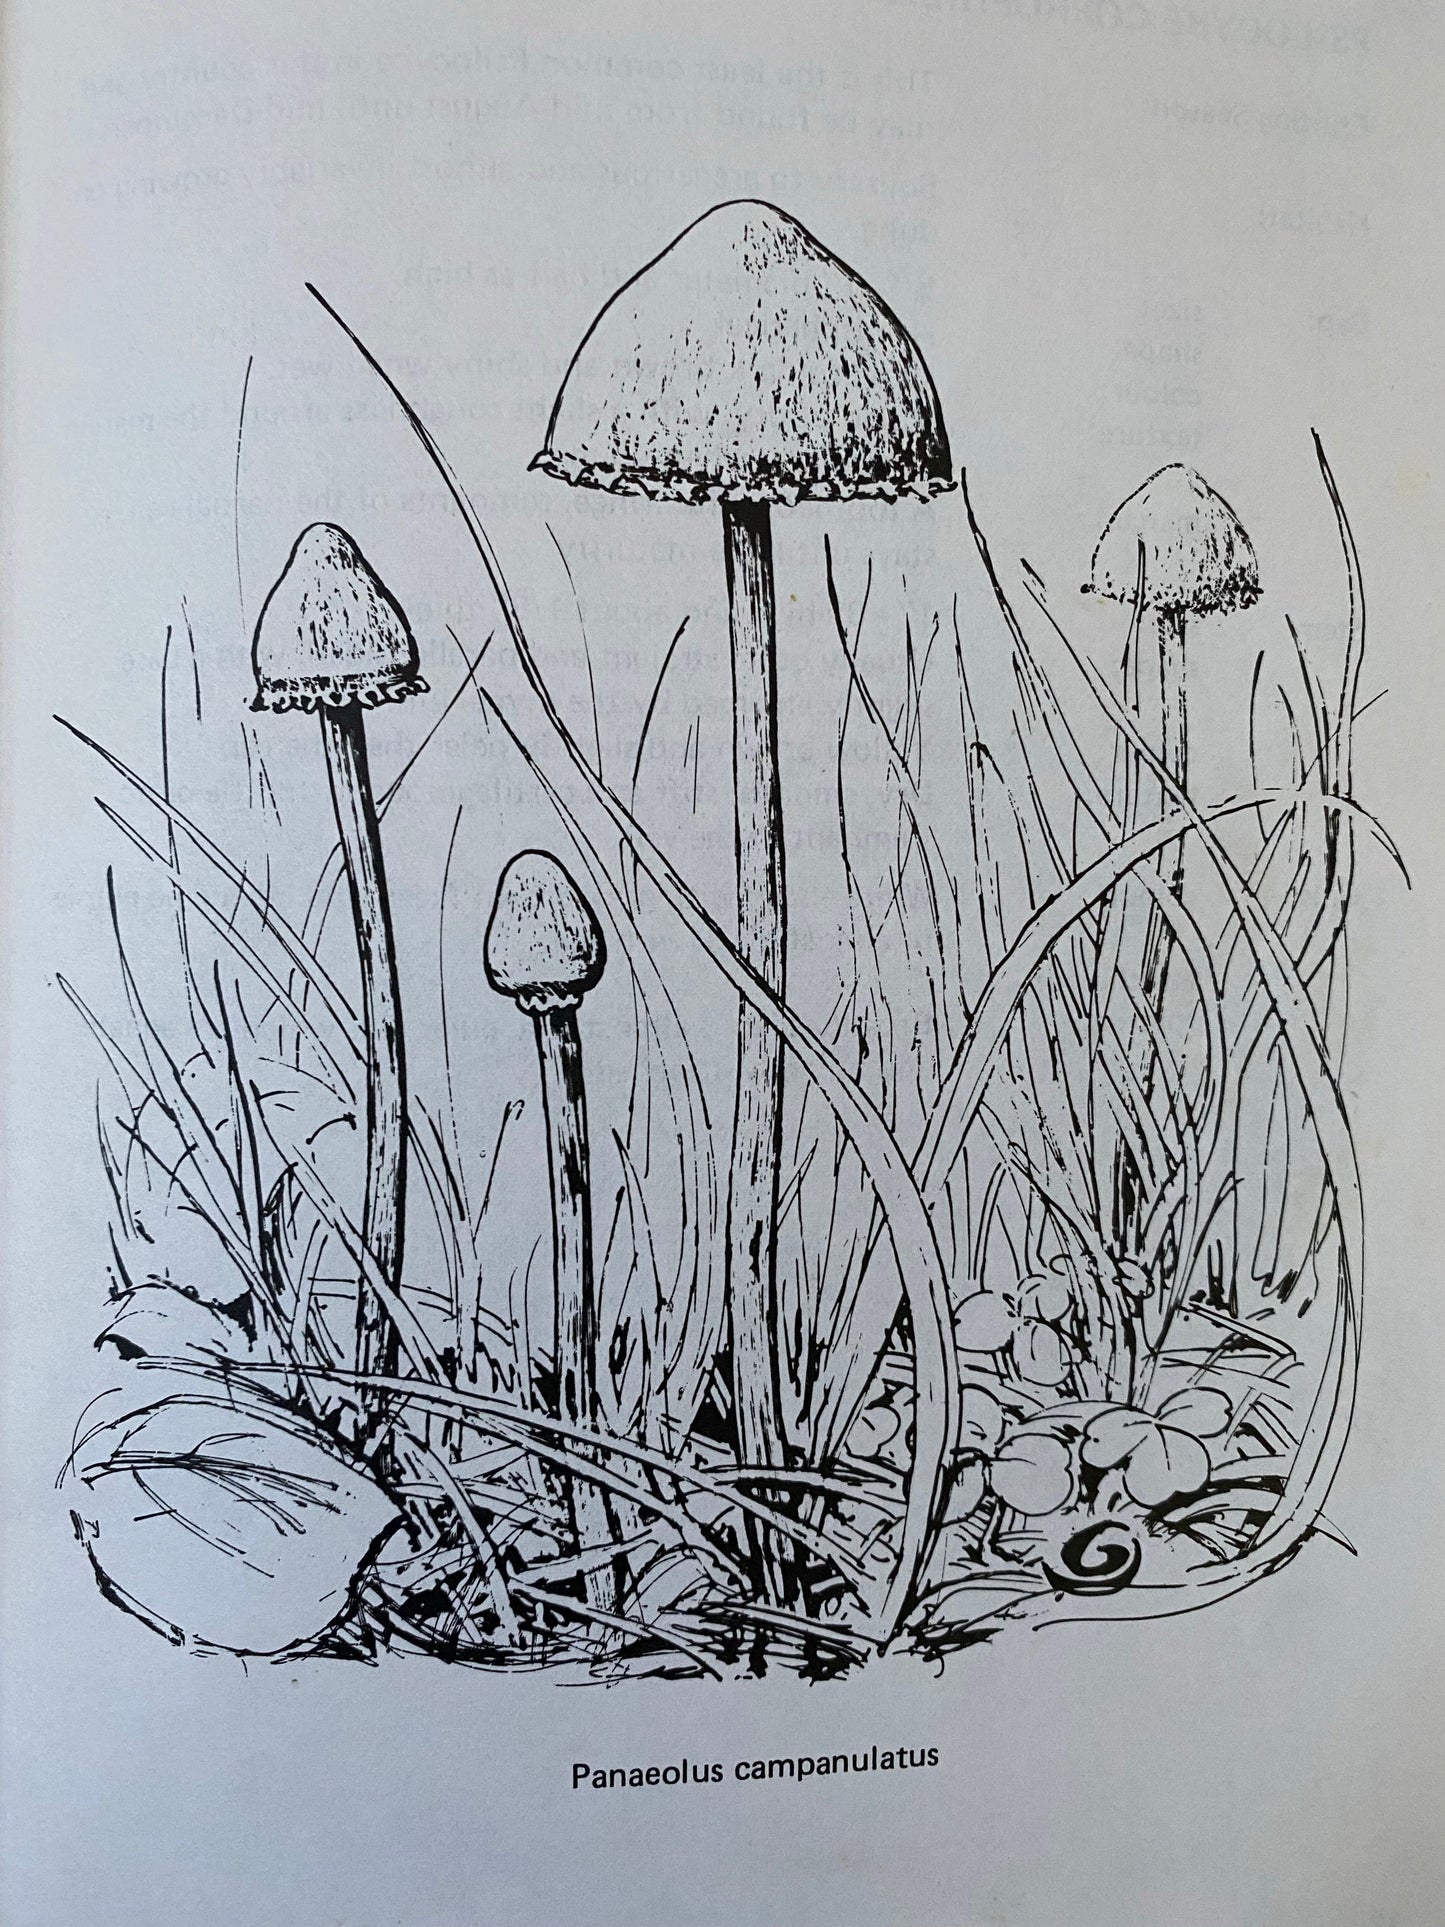 A Guide To British Psilocybin Mushrooms (1994)